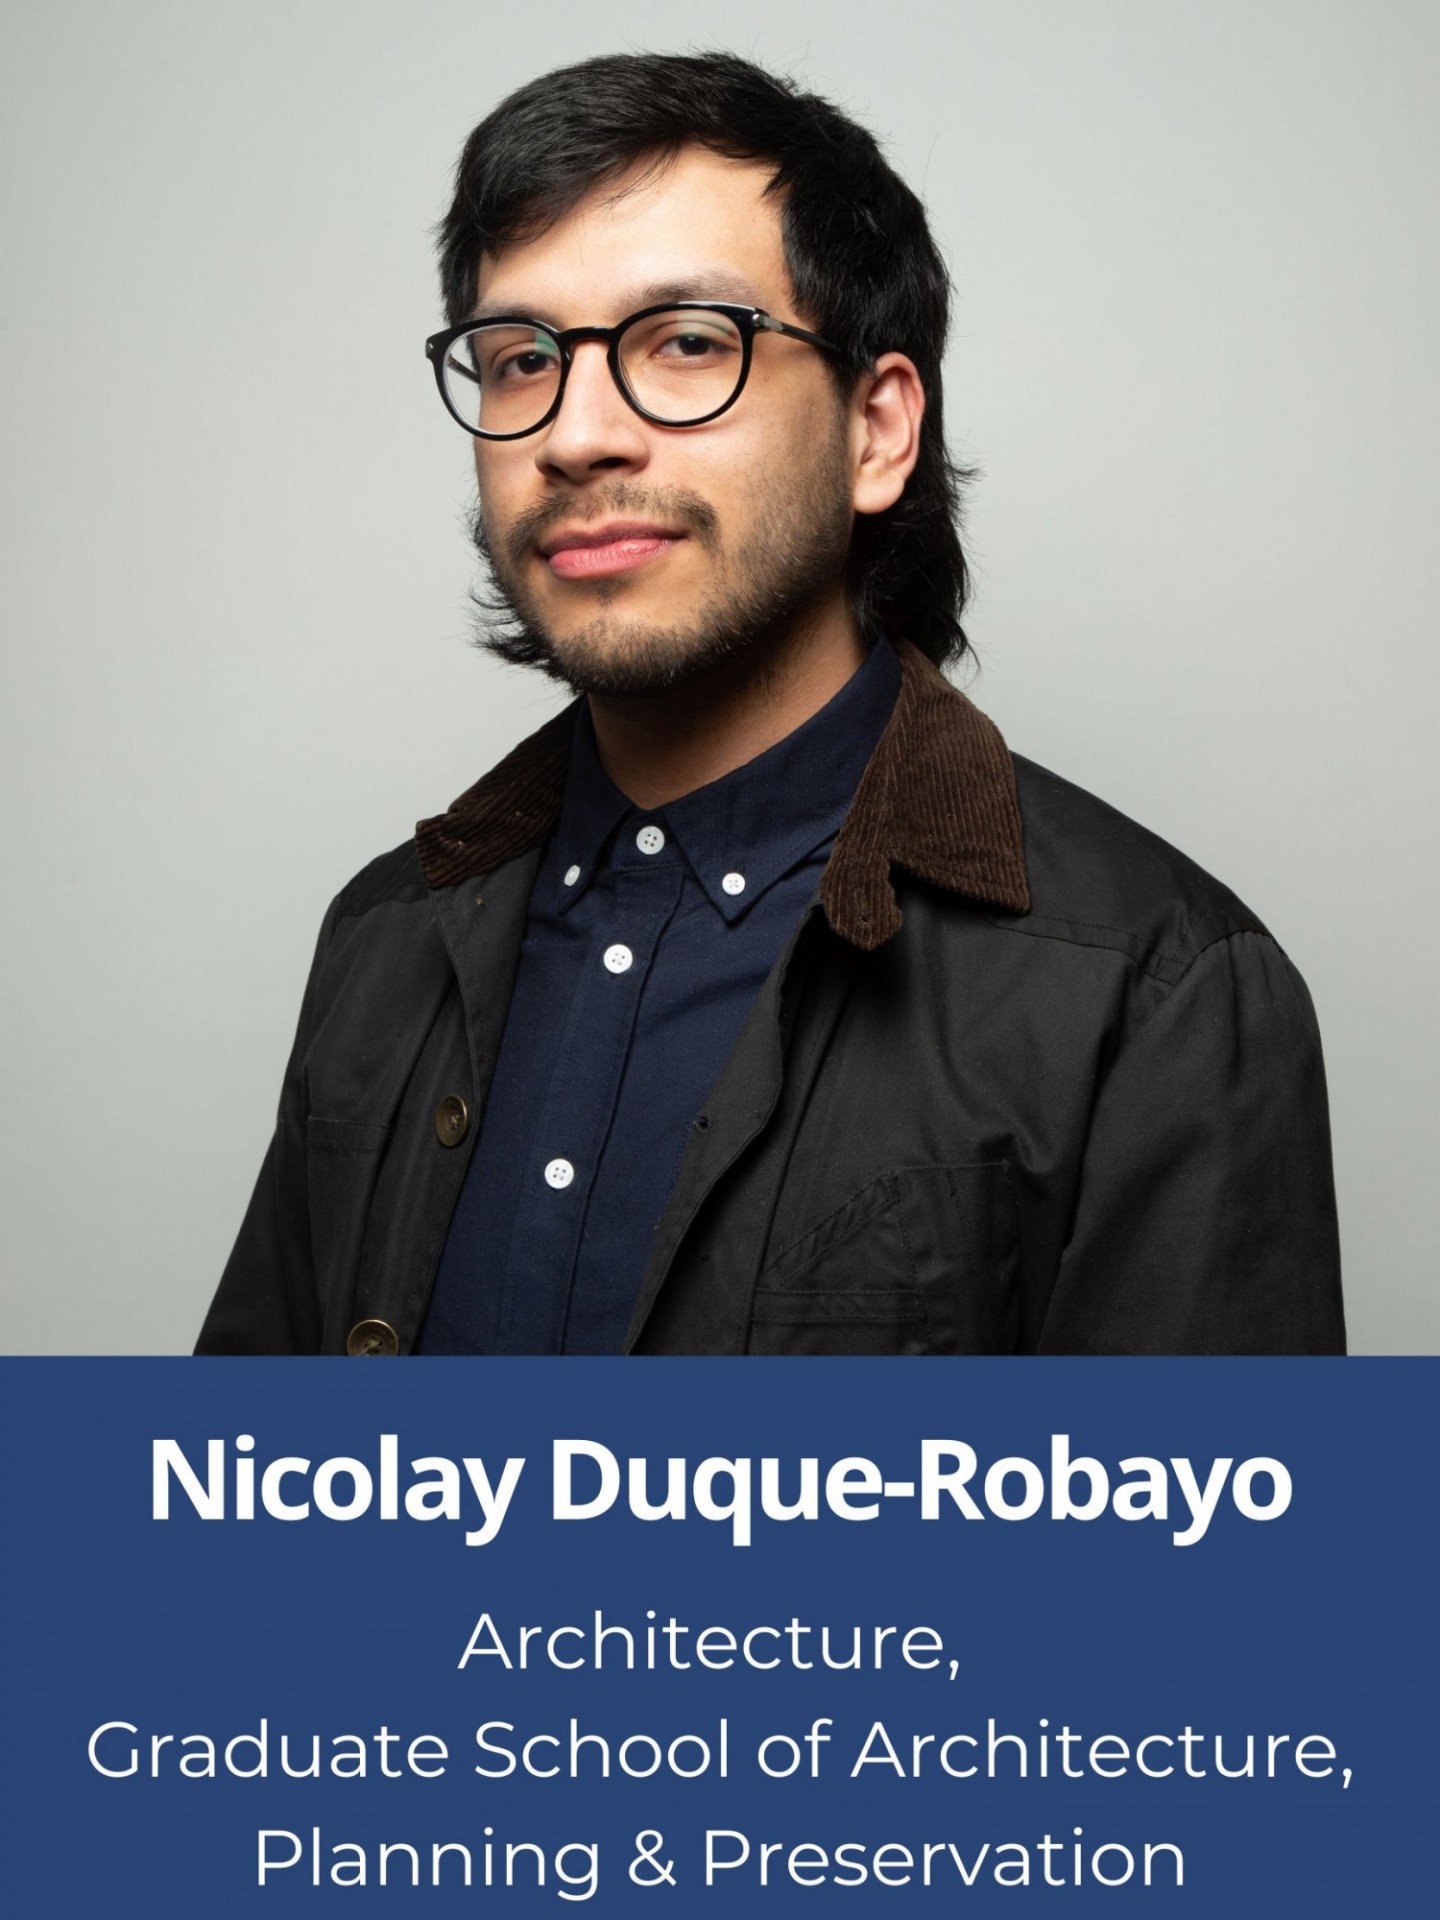 Headshot of Nicolay Duque-Robayo with his name underneath